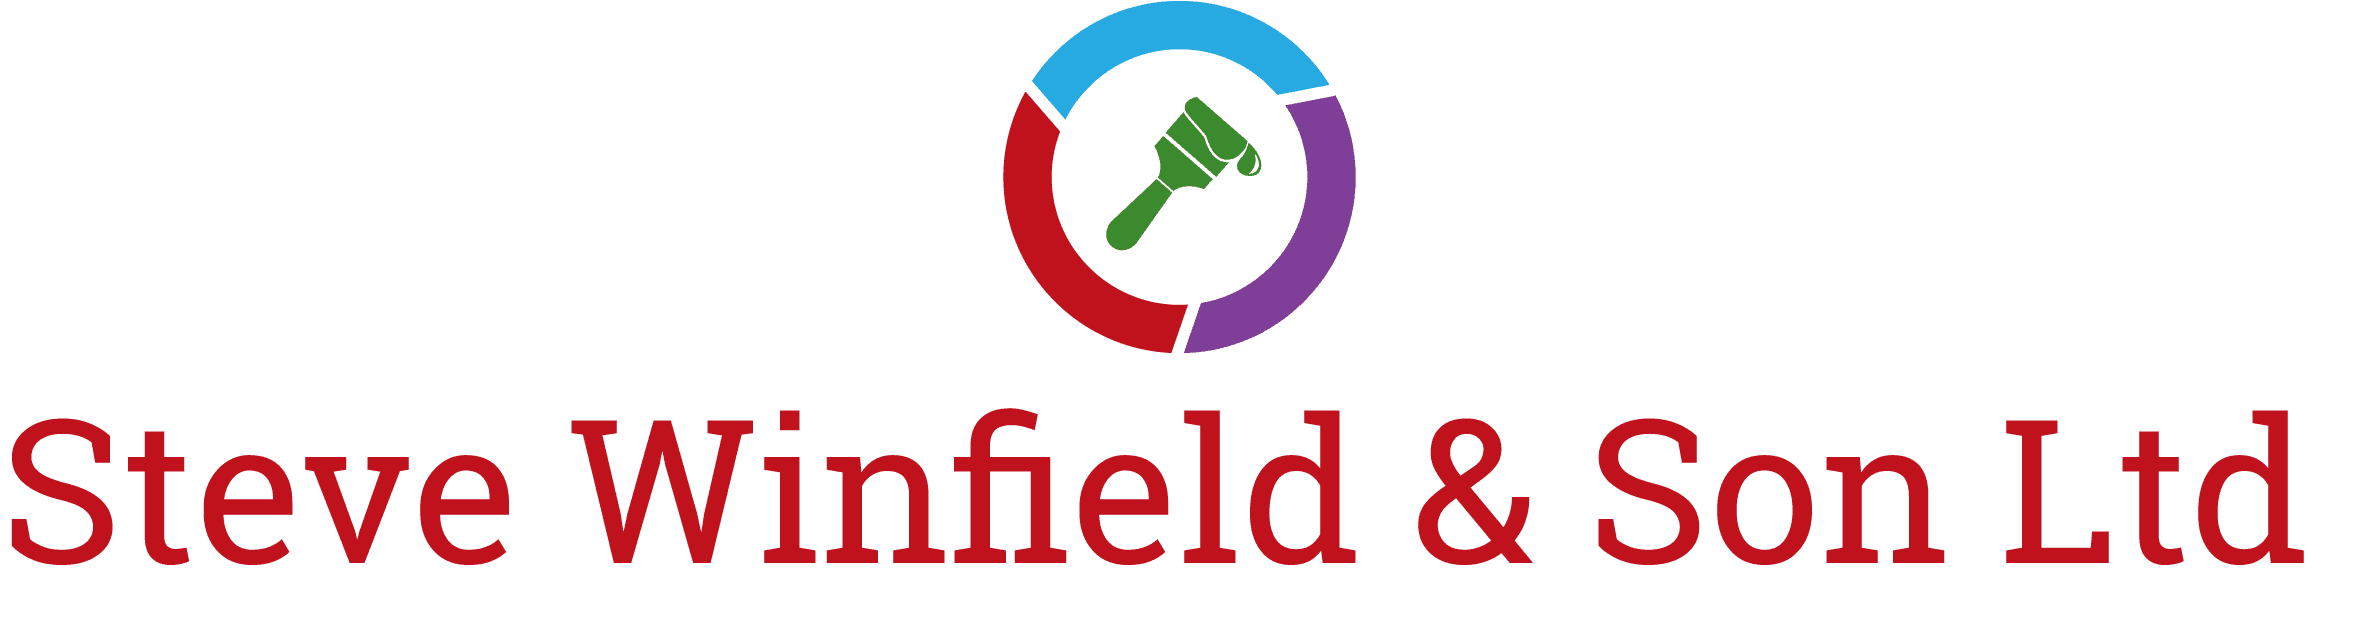 Steve Winfield & Son Ltd logo